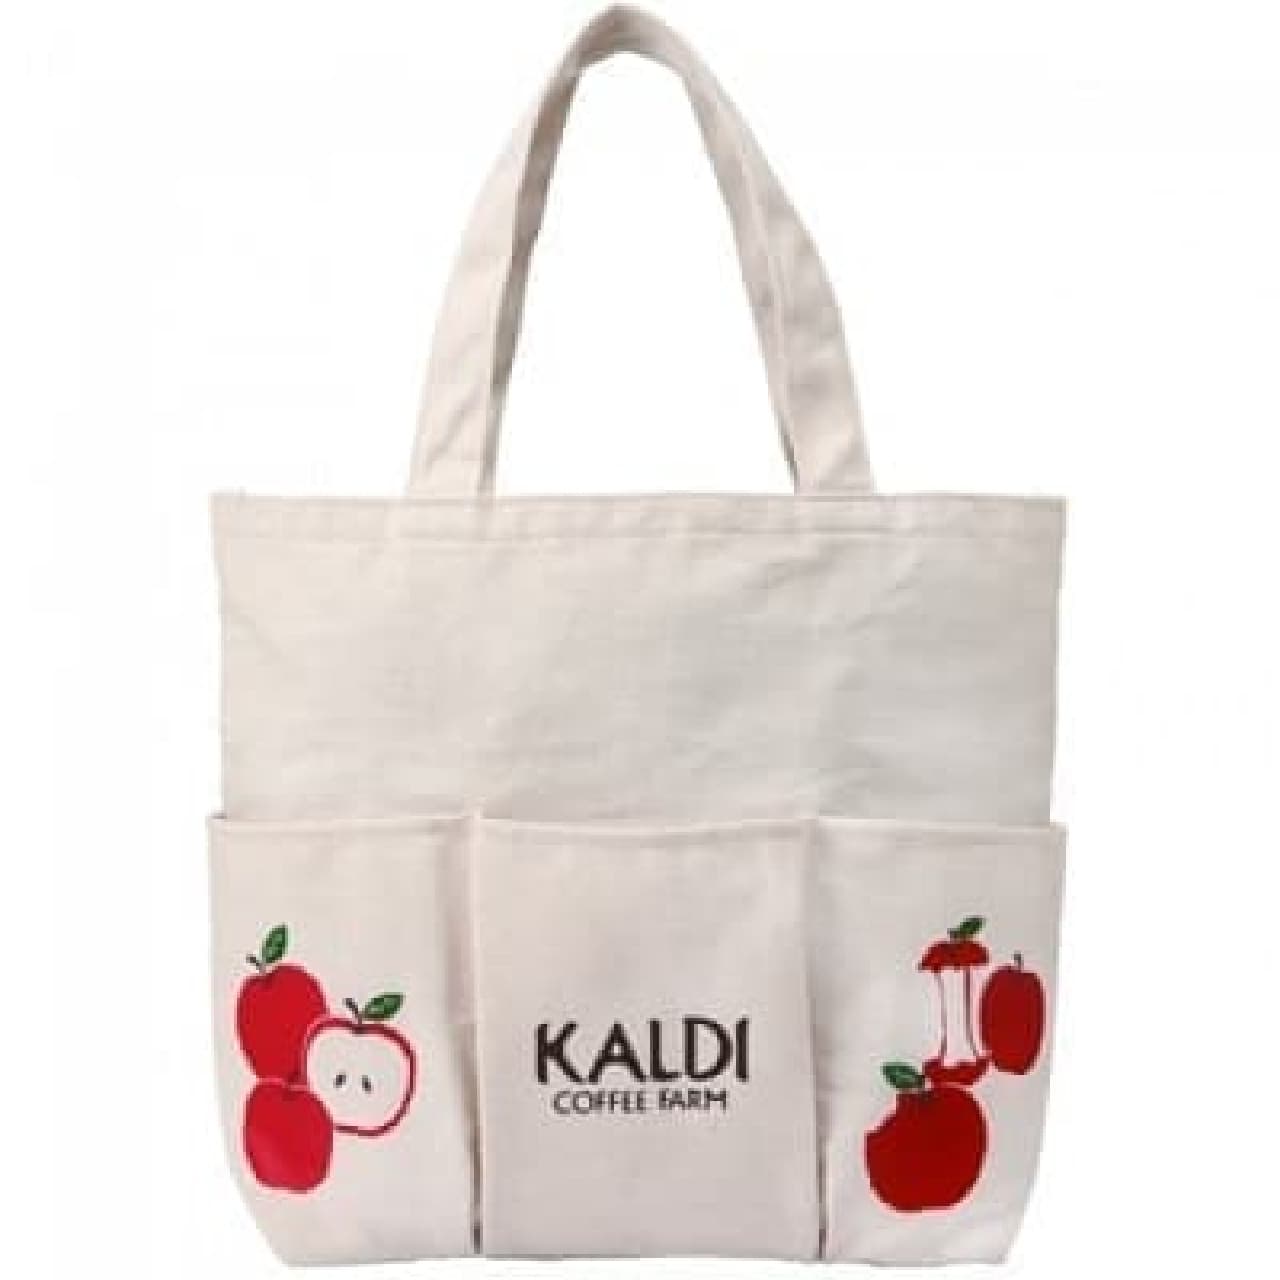 KALDI Coffee Farm "Apple Bag"